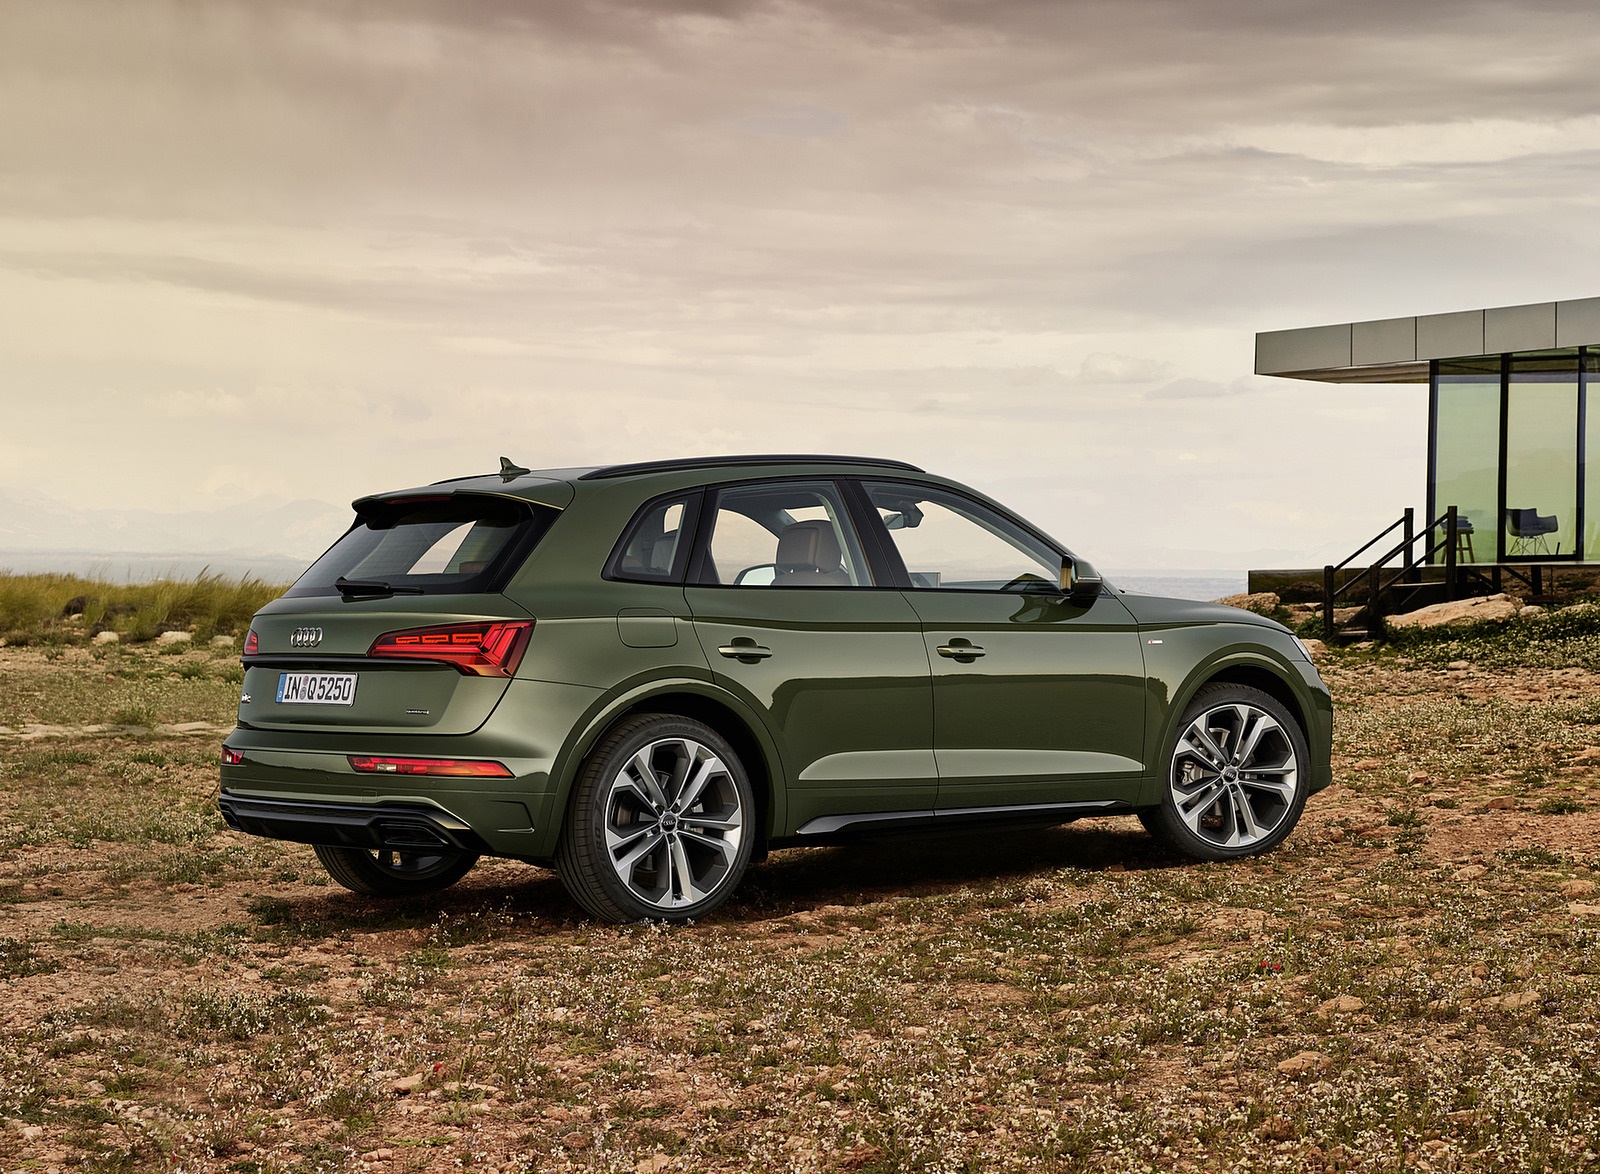 2021 Audi Q5 (Color: District Green) Rear Three-Quarter Wallpapers #16 of 78